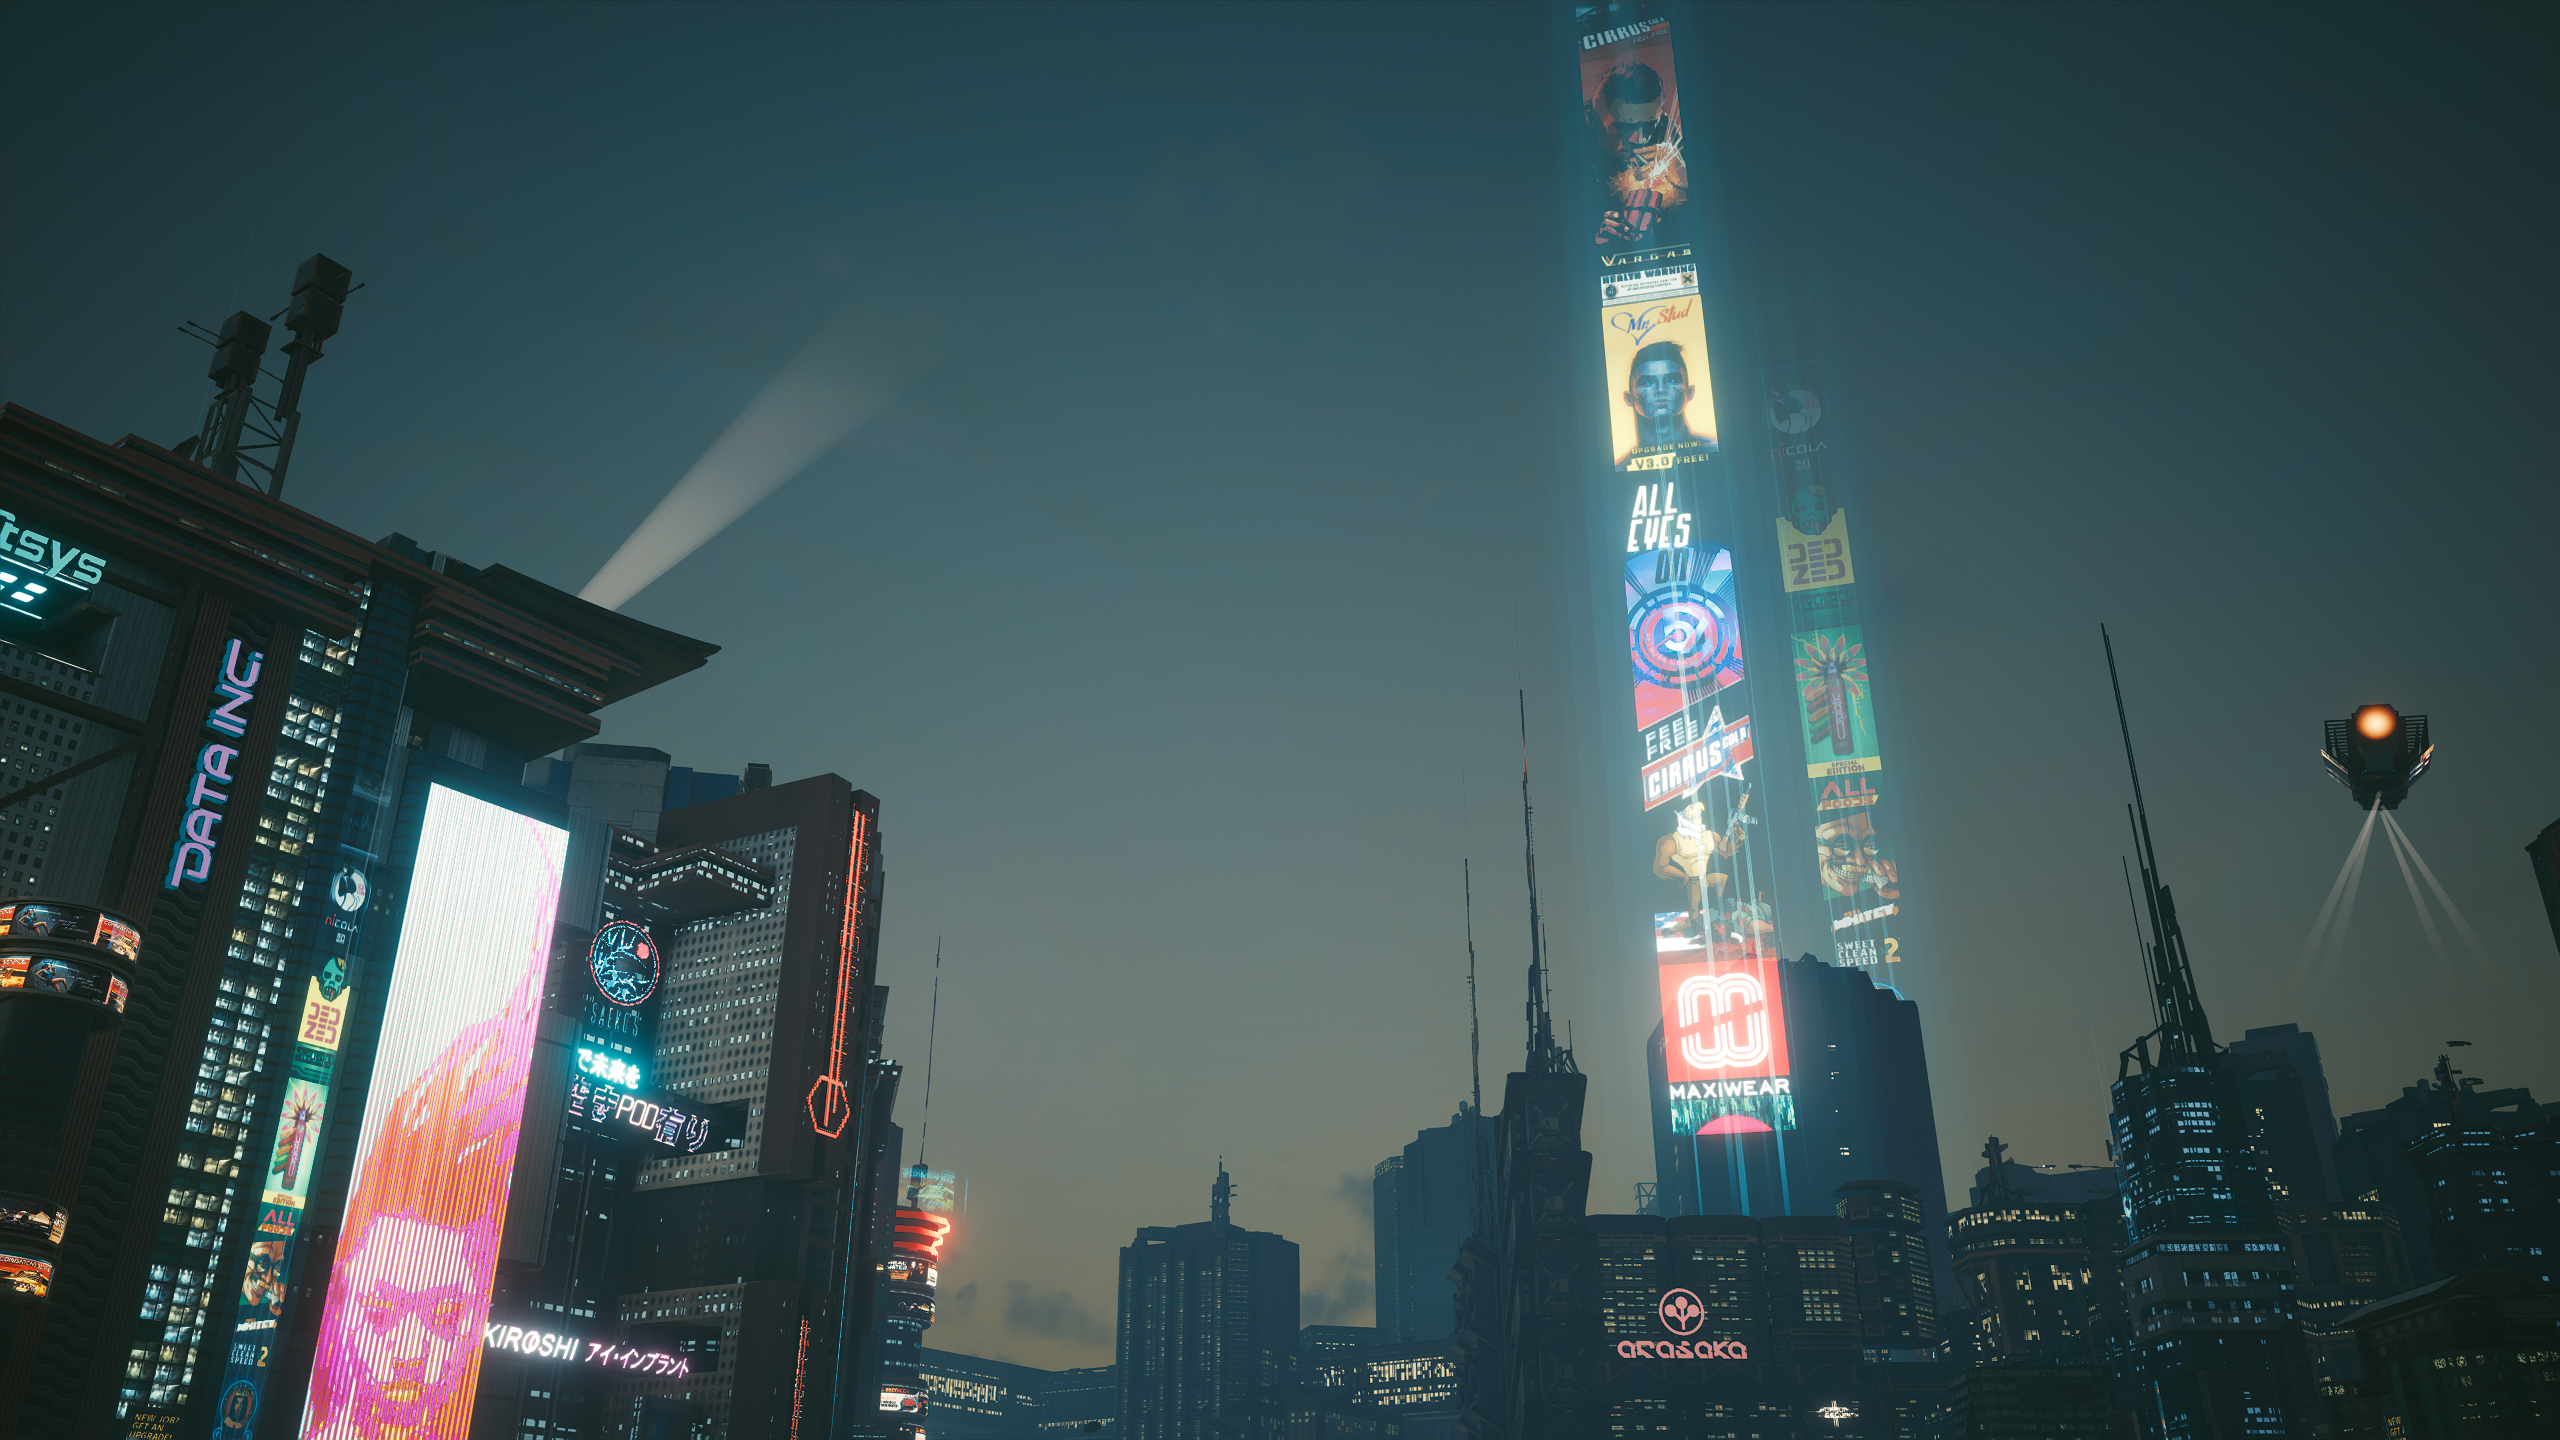 General 2560x1440 Cyberpunk 2077 cityscape futuristic futuristic city neon video games digital art low light